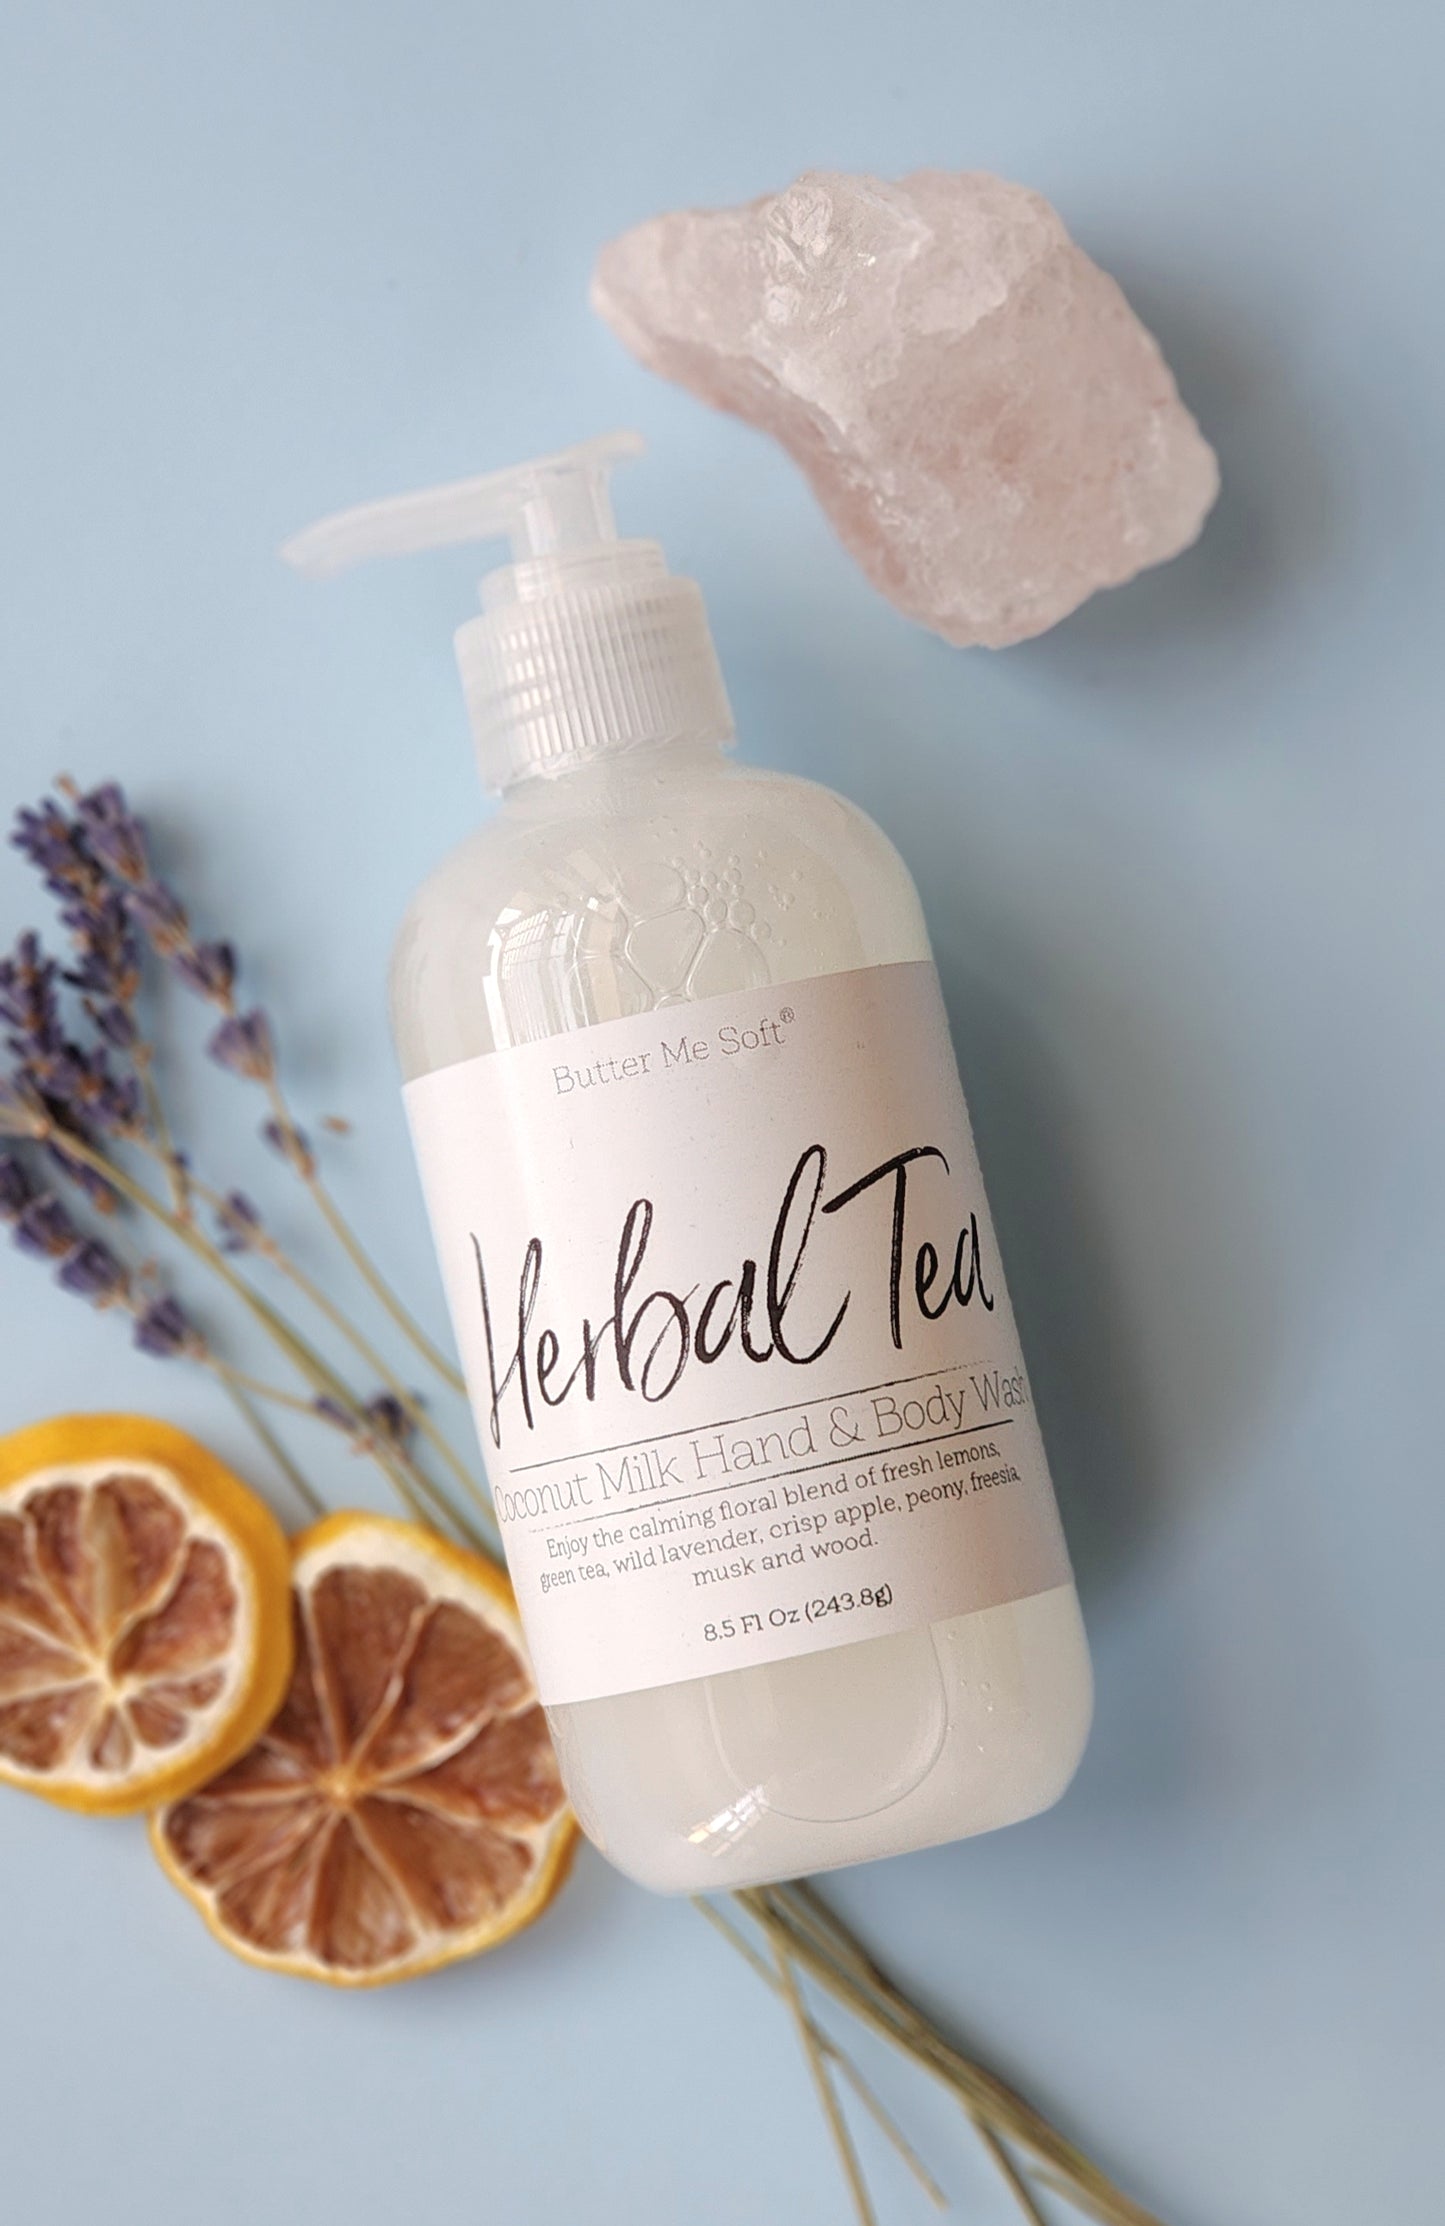 Herbal Tea Coconut Milk Hand & Body Wash